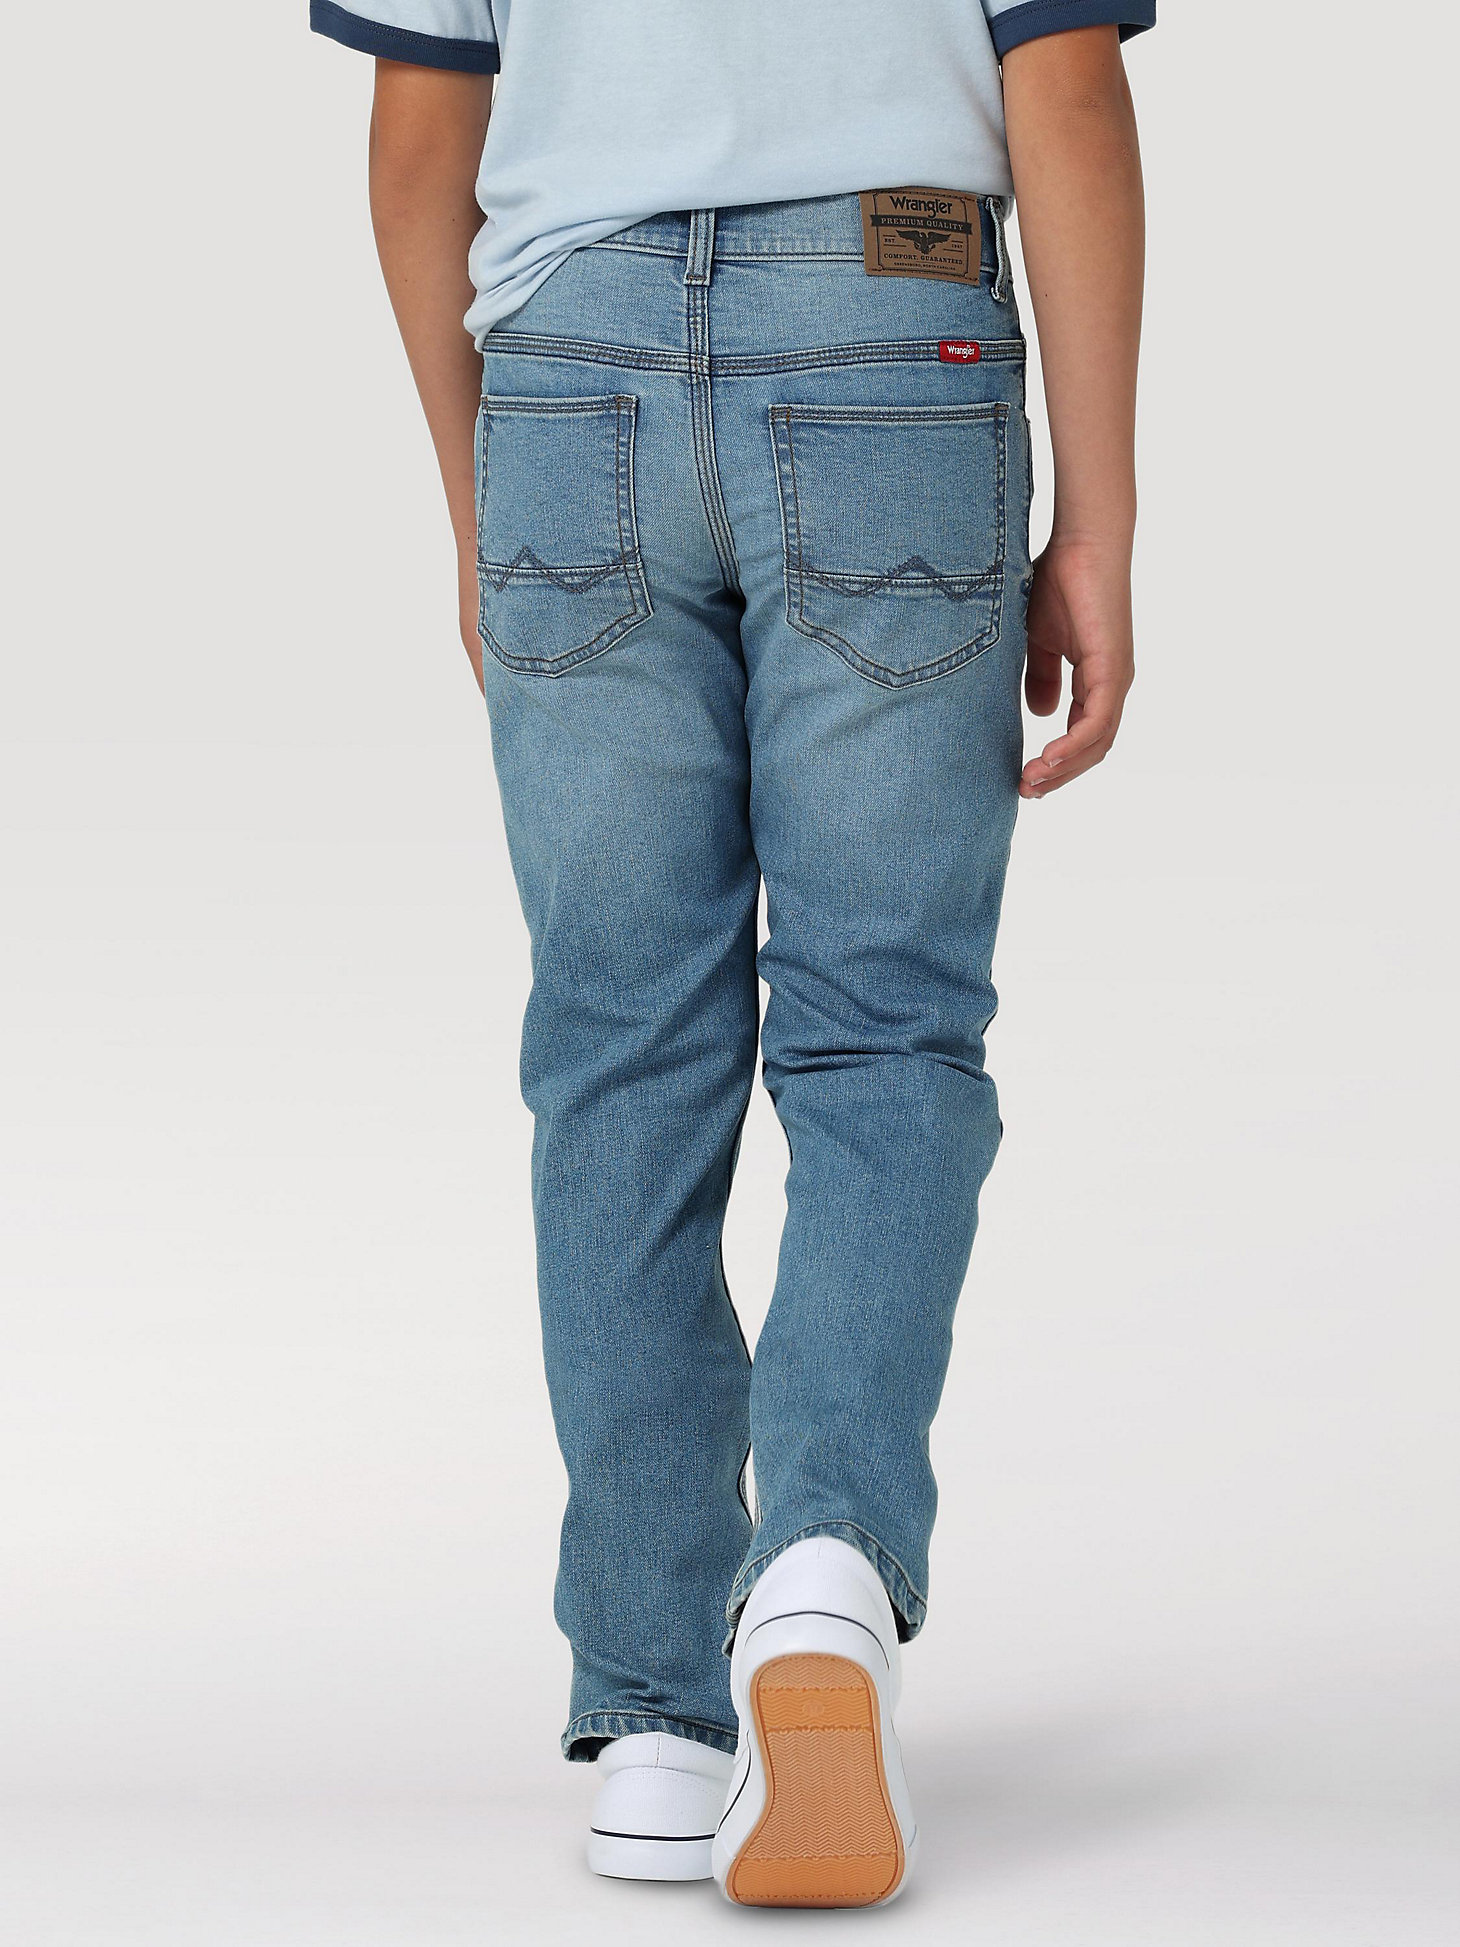 Boy's Indigood Slim Fit Jean (Husky) in Worn Blue alternative view 1